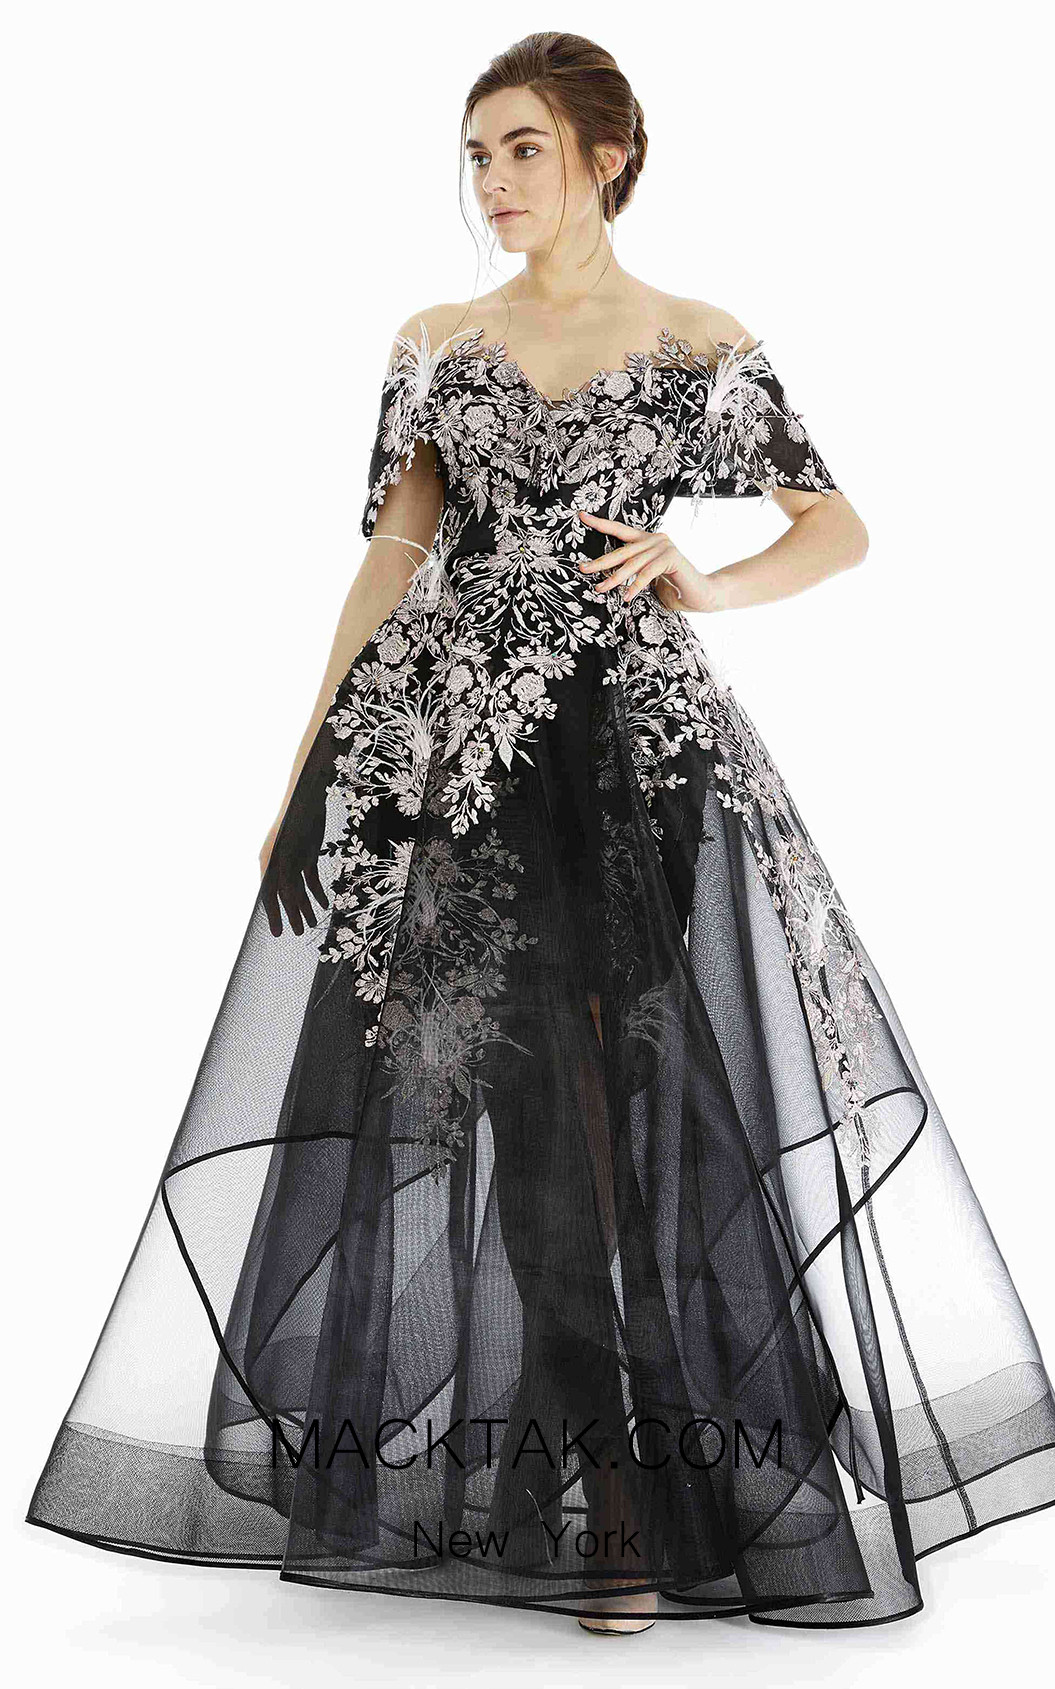 MackTak Couture 4426 Dress